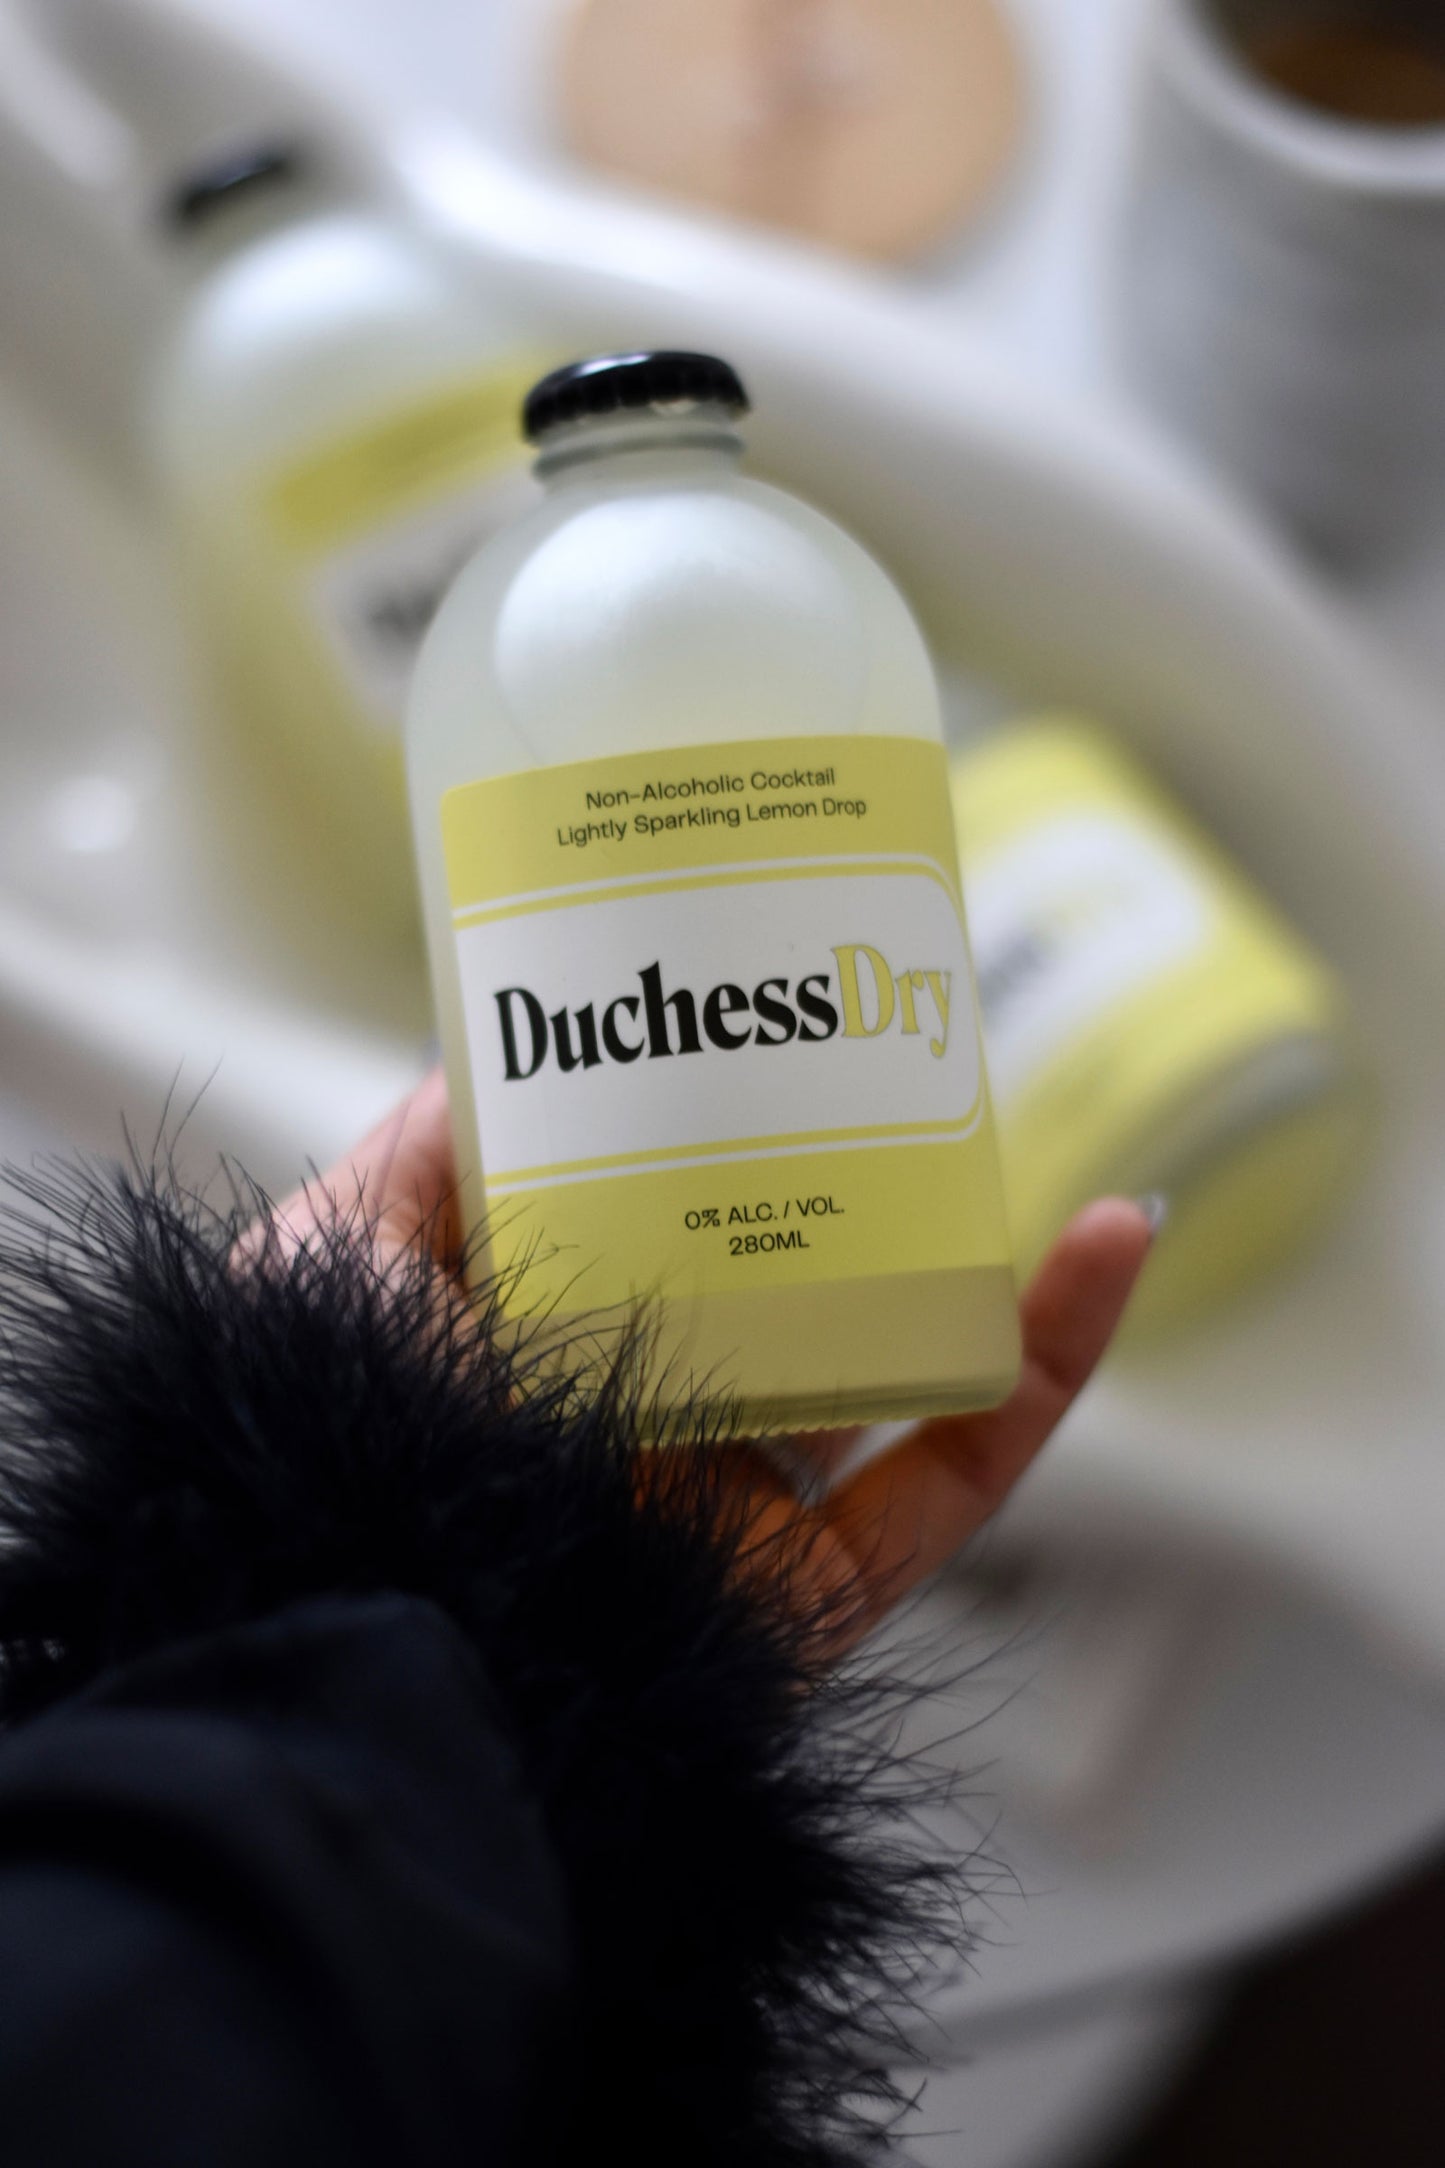 DuchessDry Non-Alcoholic Lemon Drop